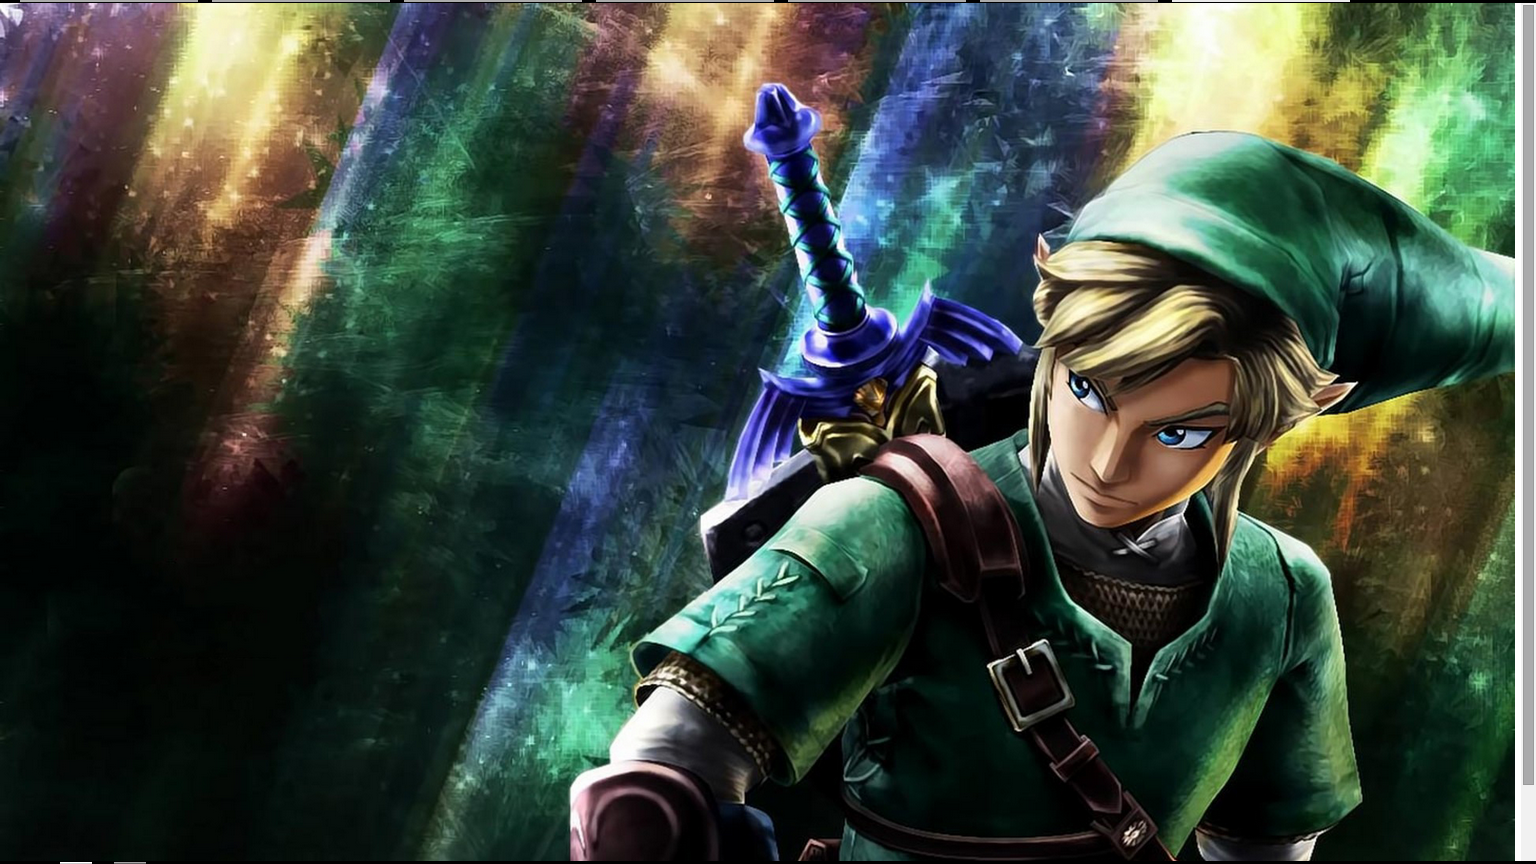 Cool loz wallpaper - The Legend of Zelda: Ocarina of Time Photo ...